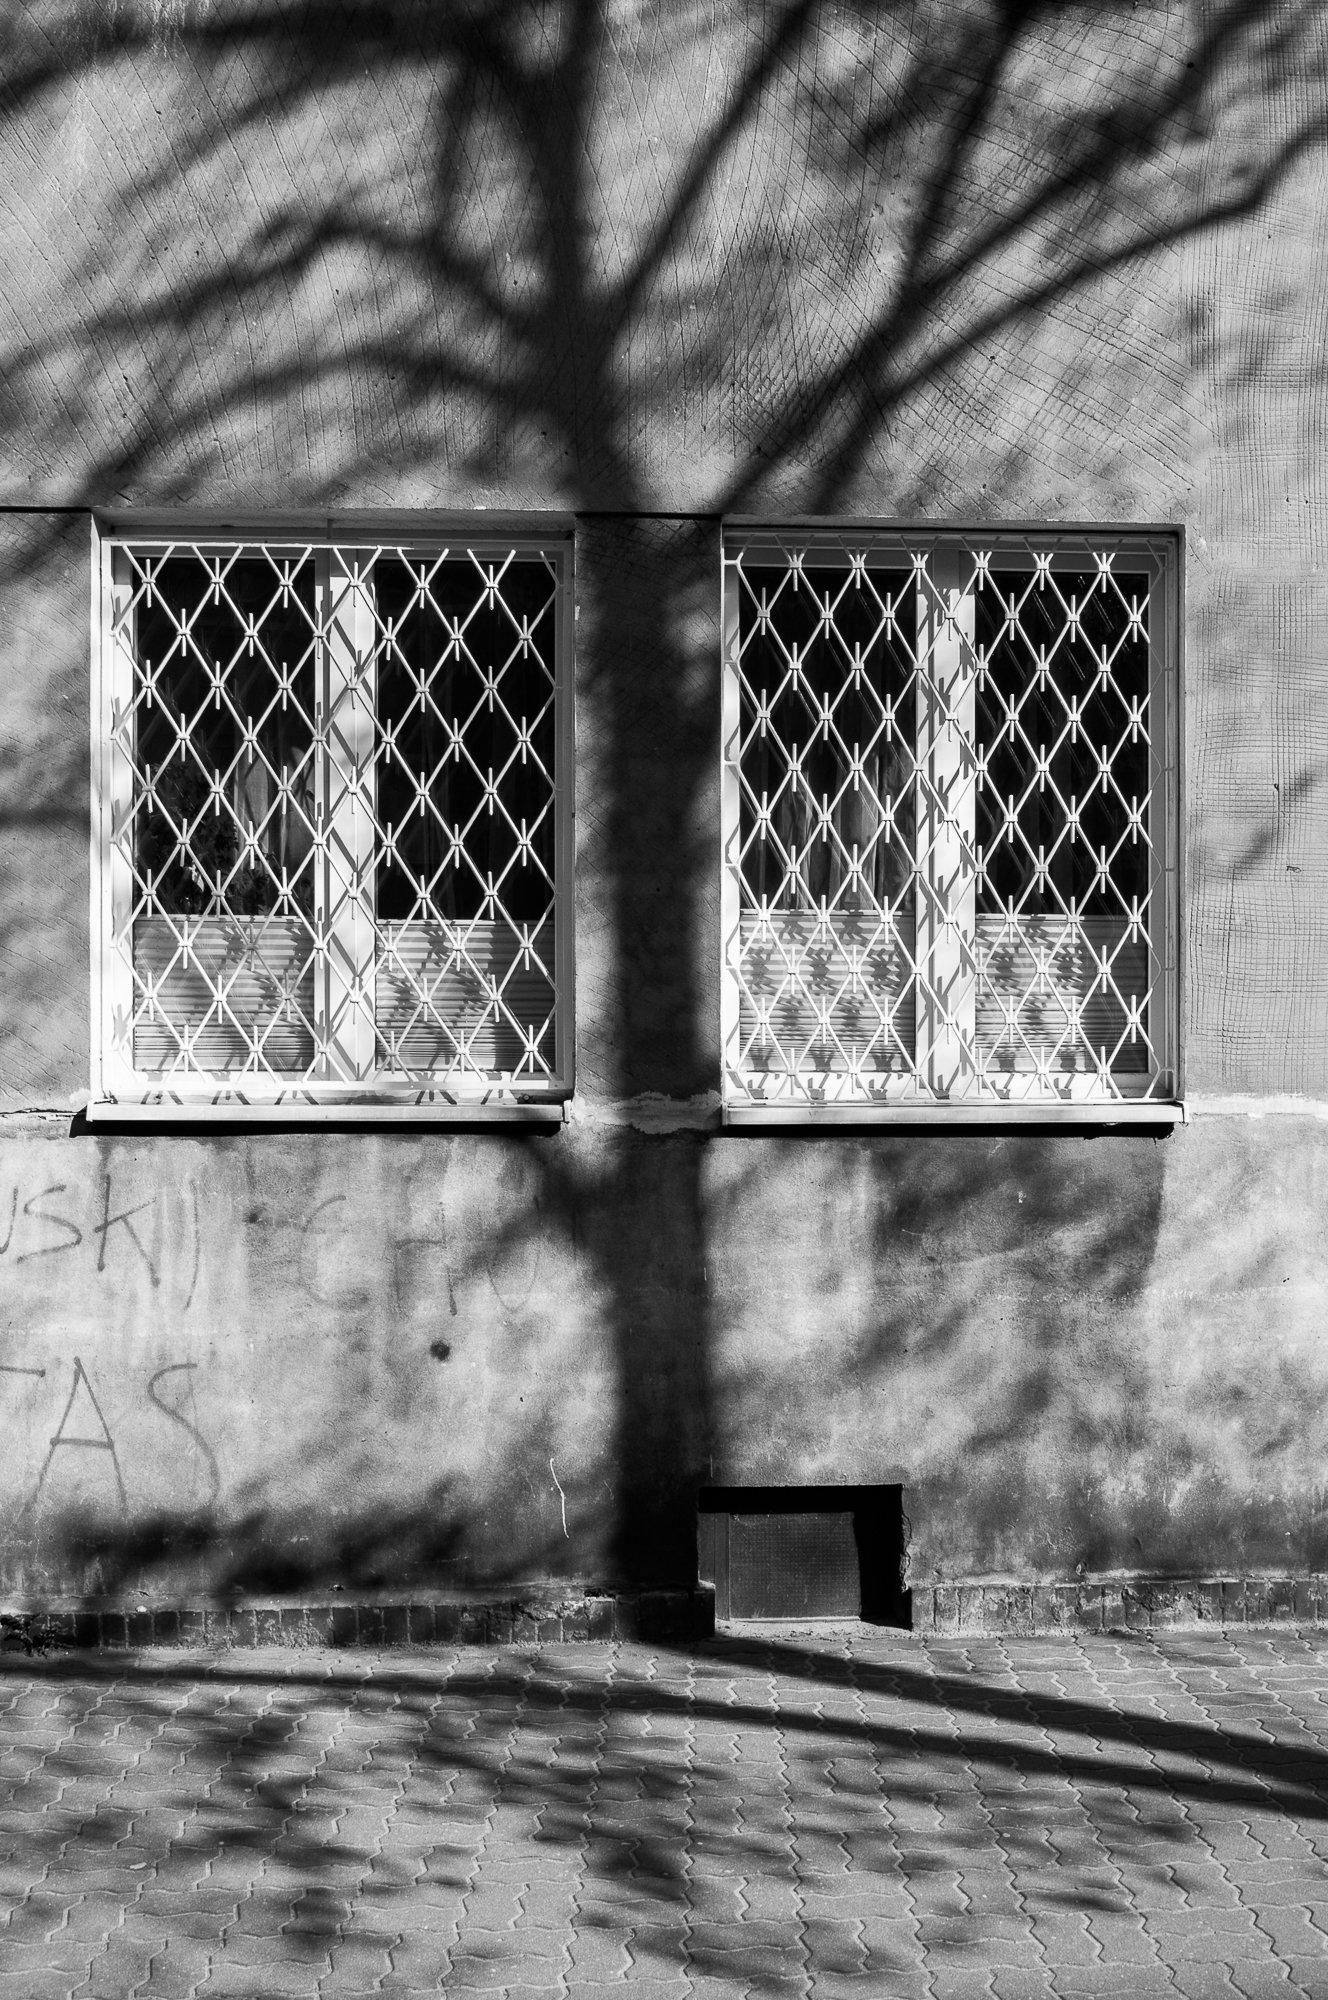 Adam Mazek Photography Warsaw (Warszawa) 2017. Post: "Endorphins." Minimalism.. Windows and the shadow of the tree.